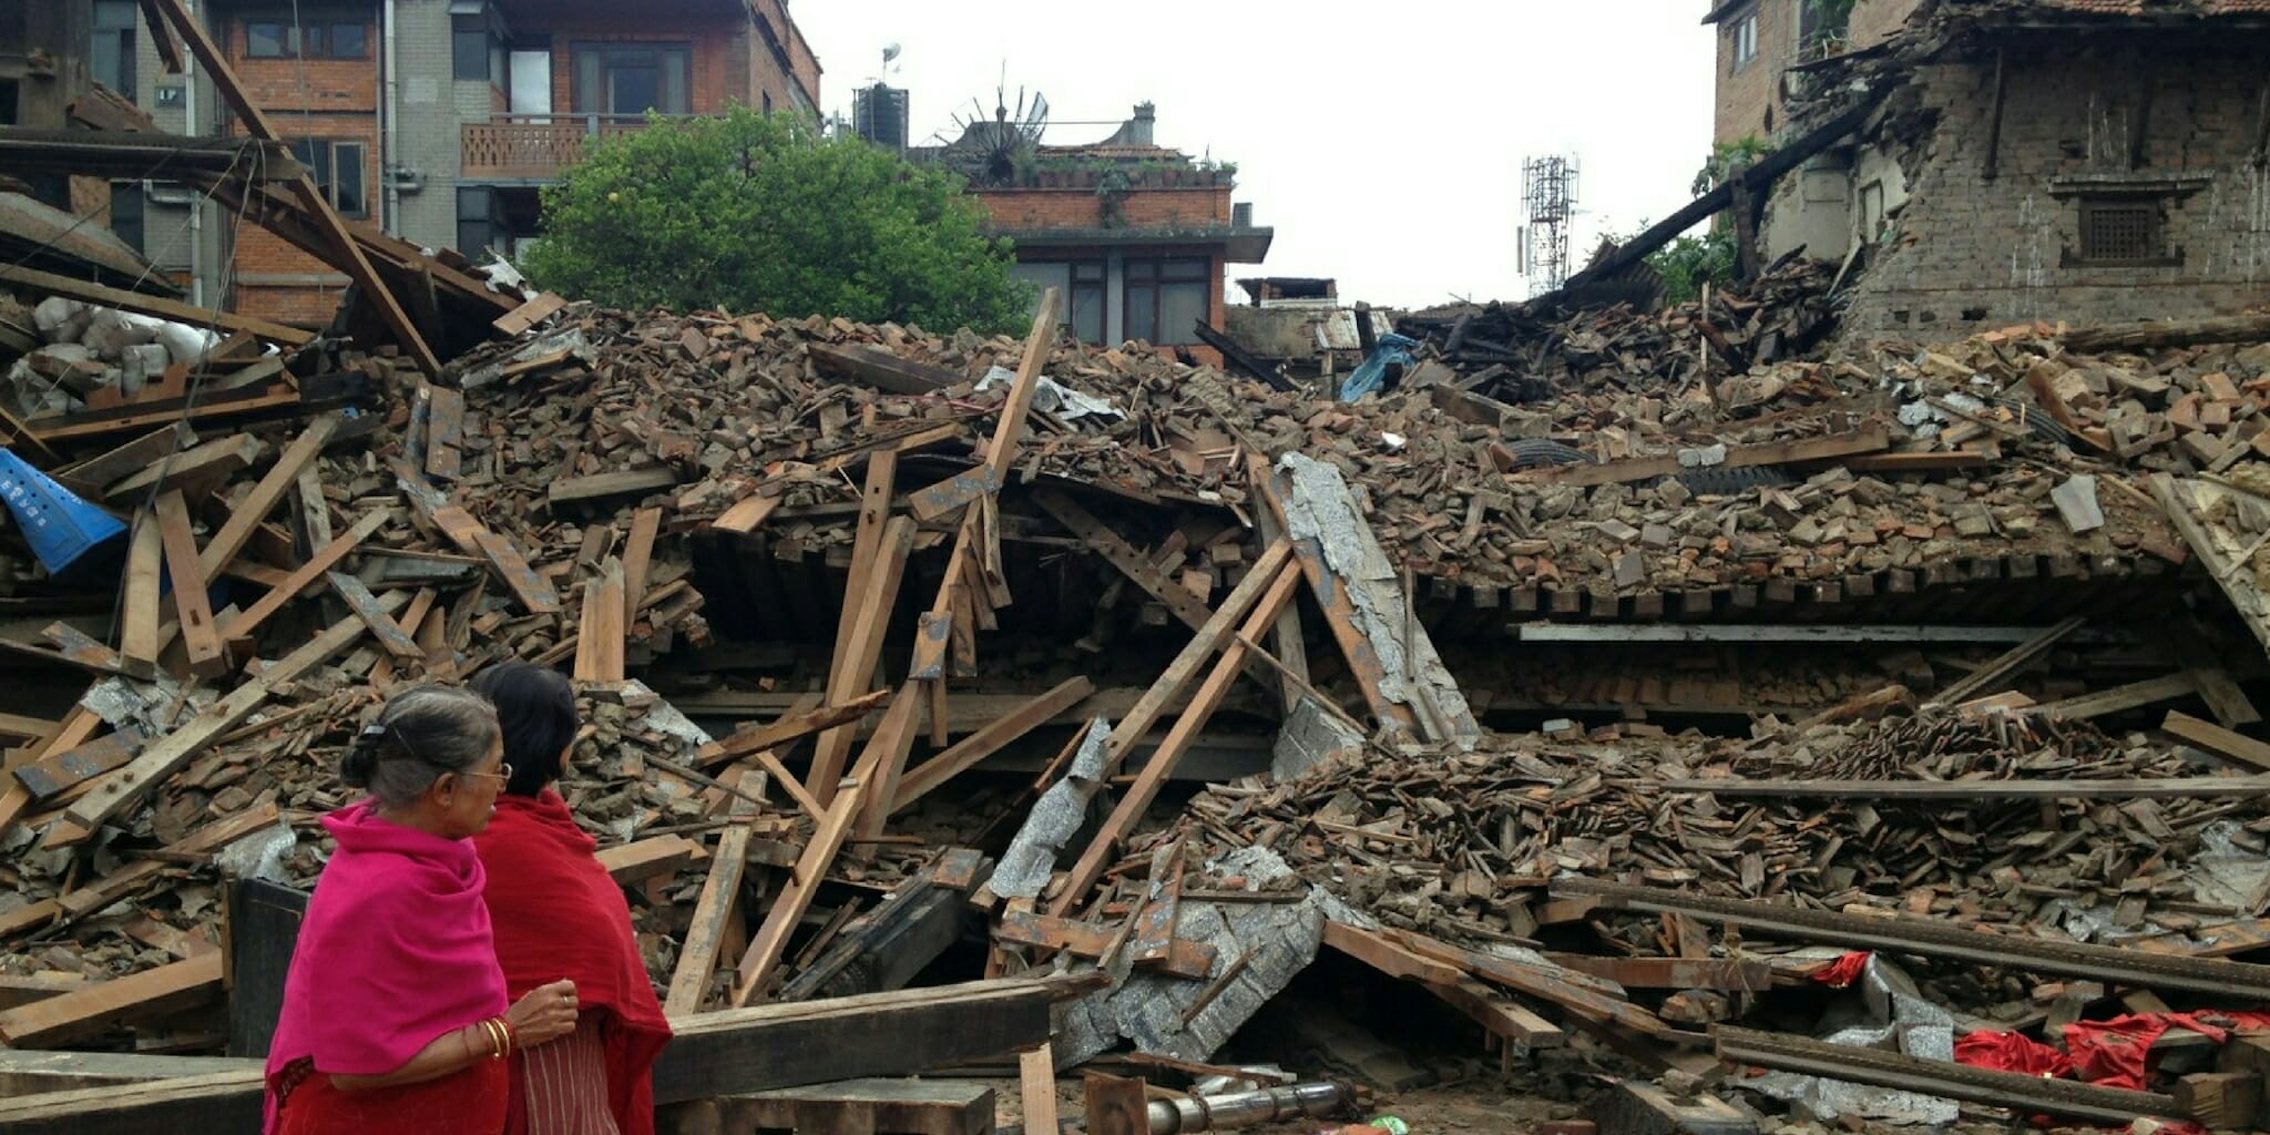 Pedestrians examine the earthquake destruction in Bhaktapur, Nepal.